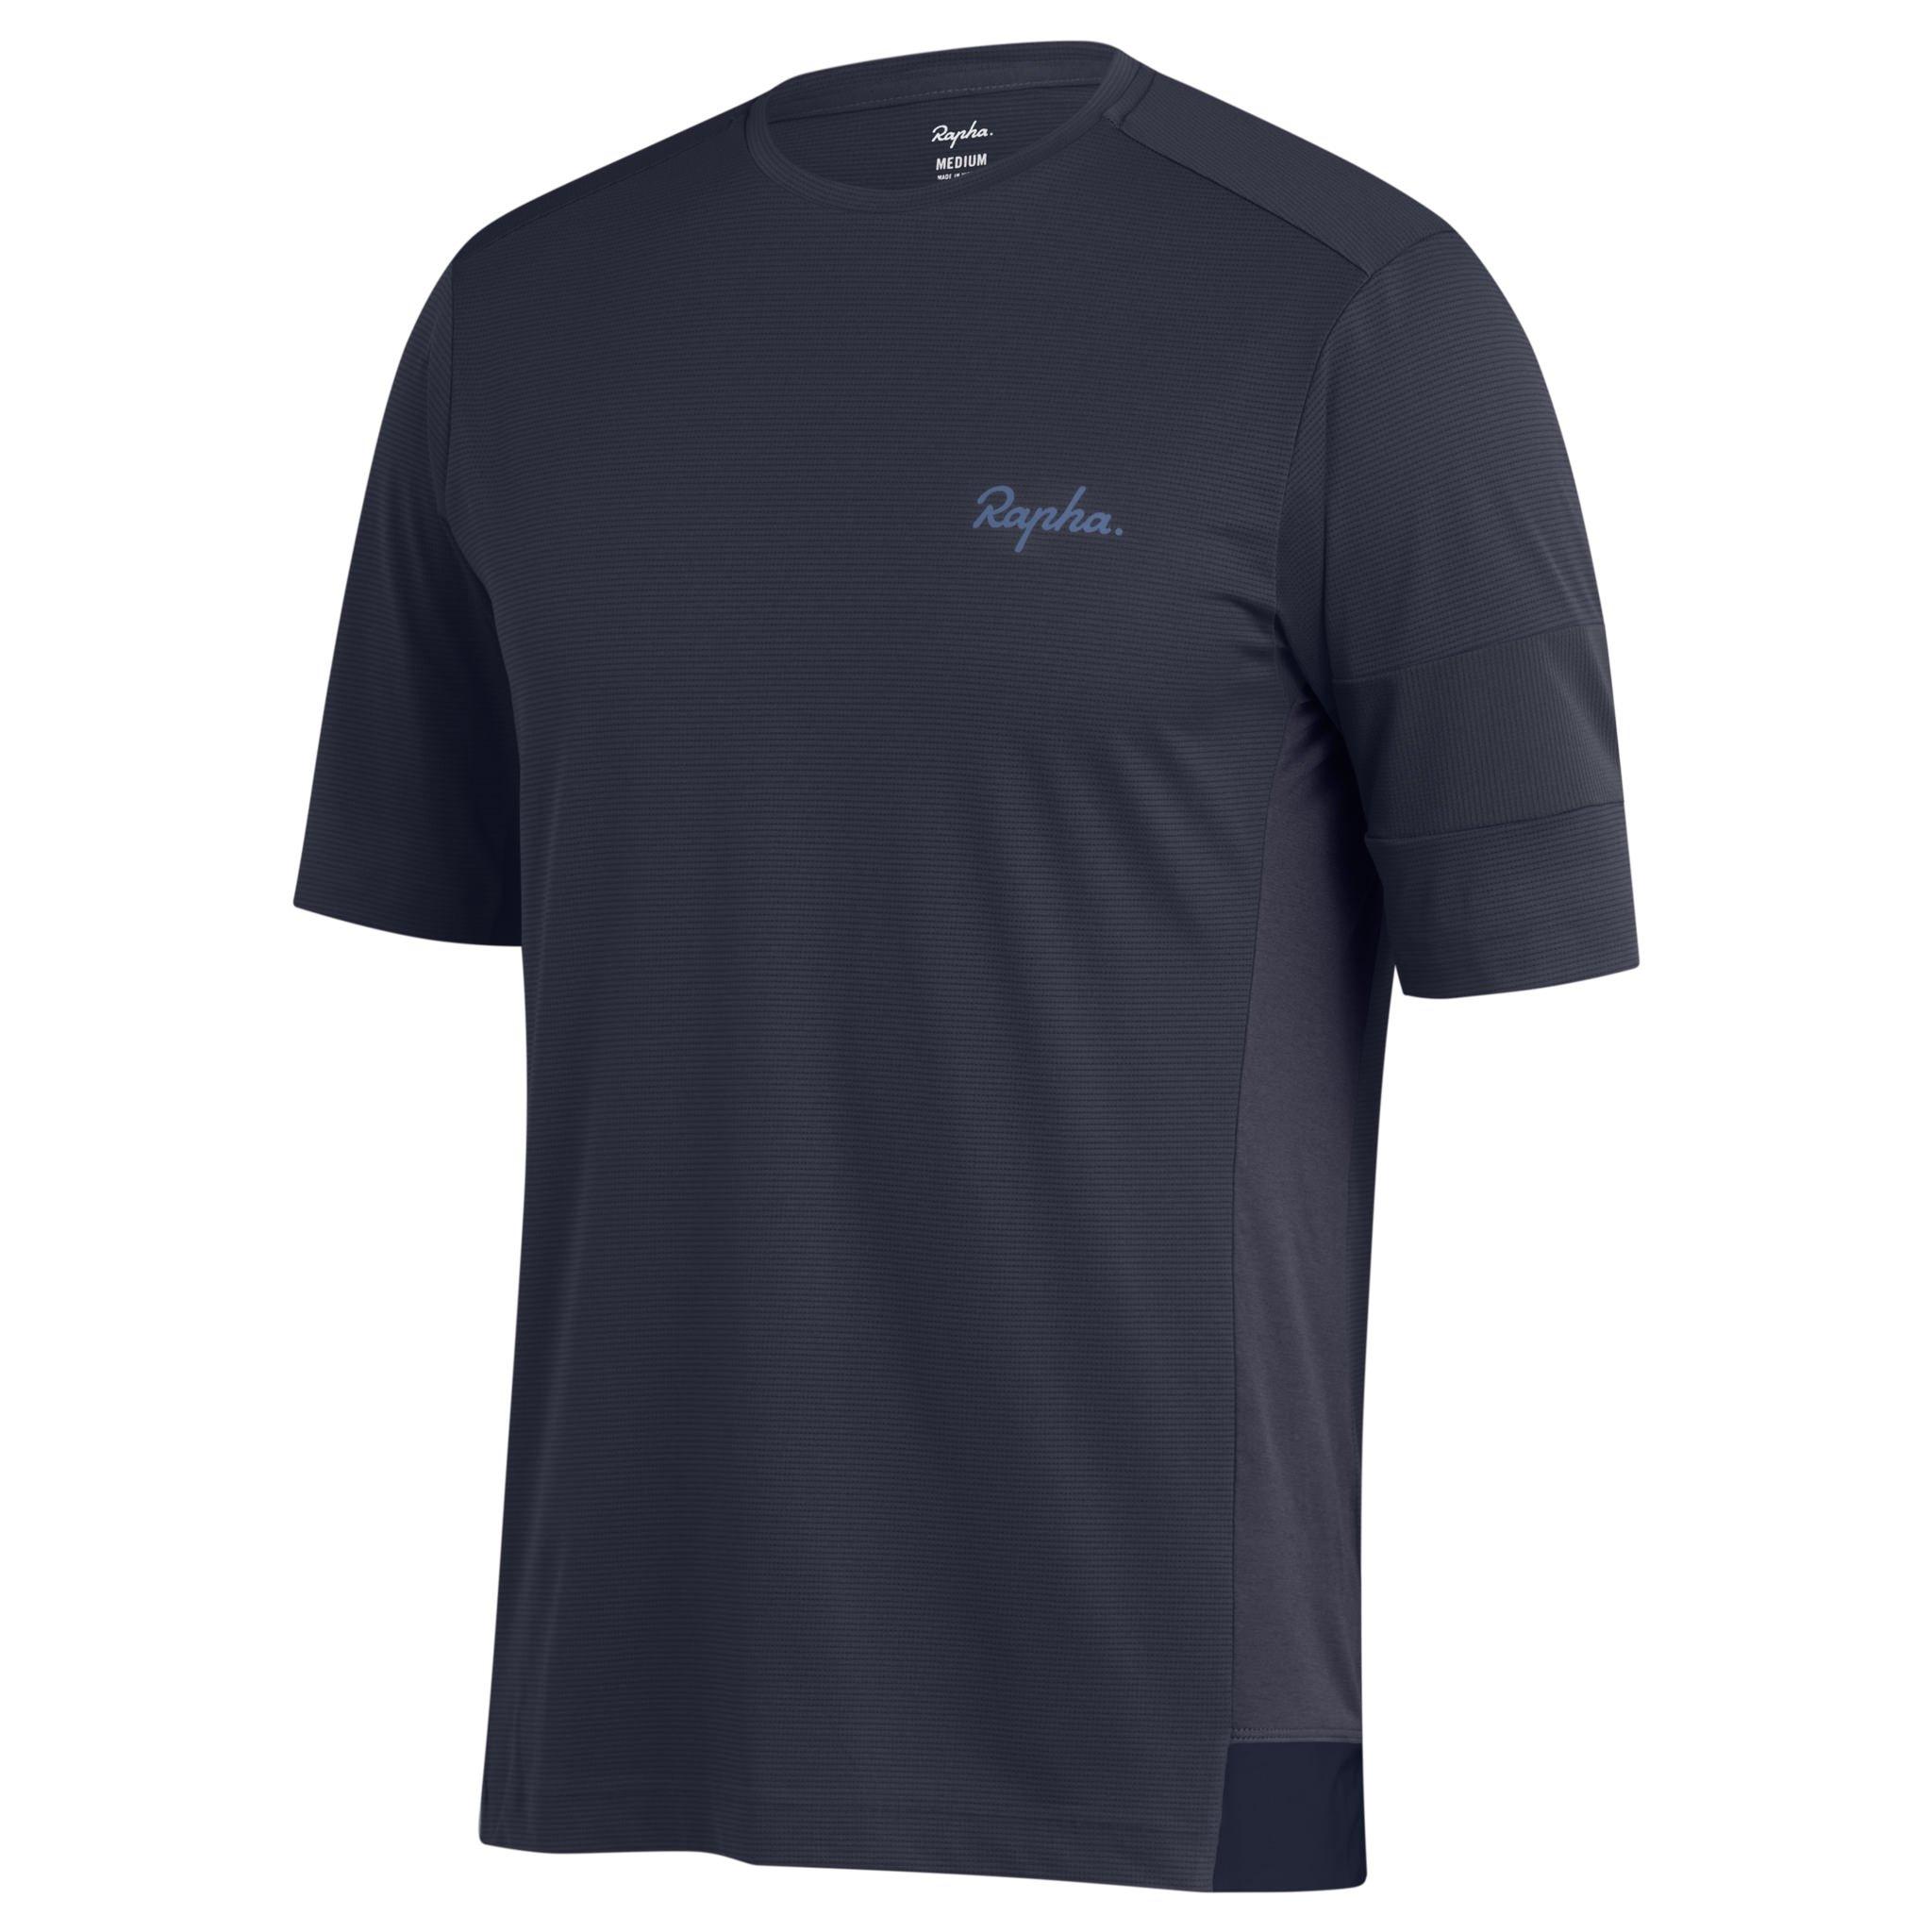 Men's Explore Technical T-Shirt - Rapha